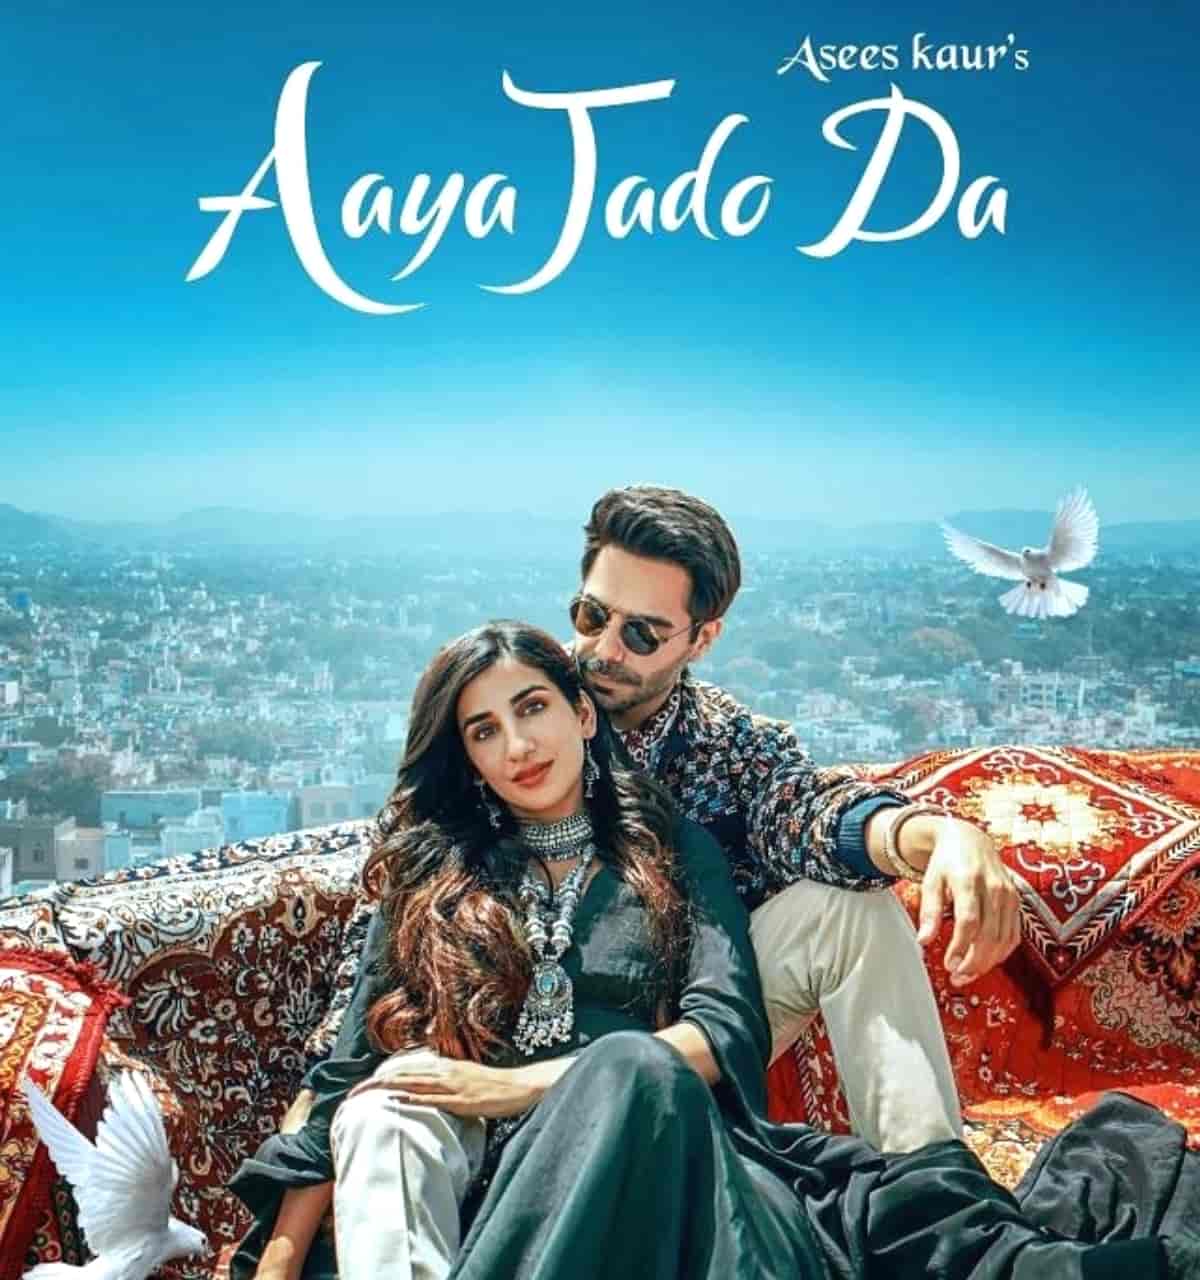 Aaya Jado Da Punjabi Song Lyrics Sung By Asees Kaur